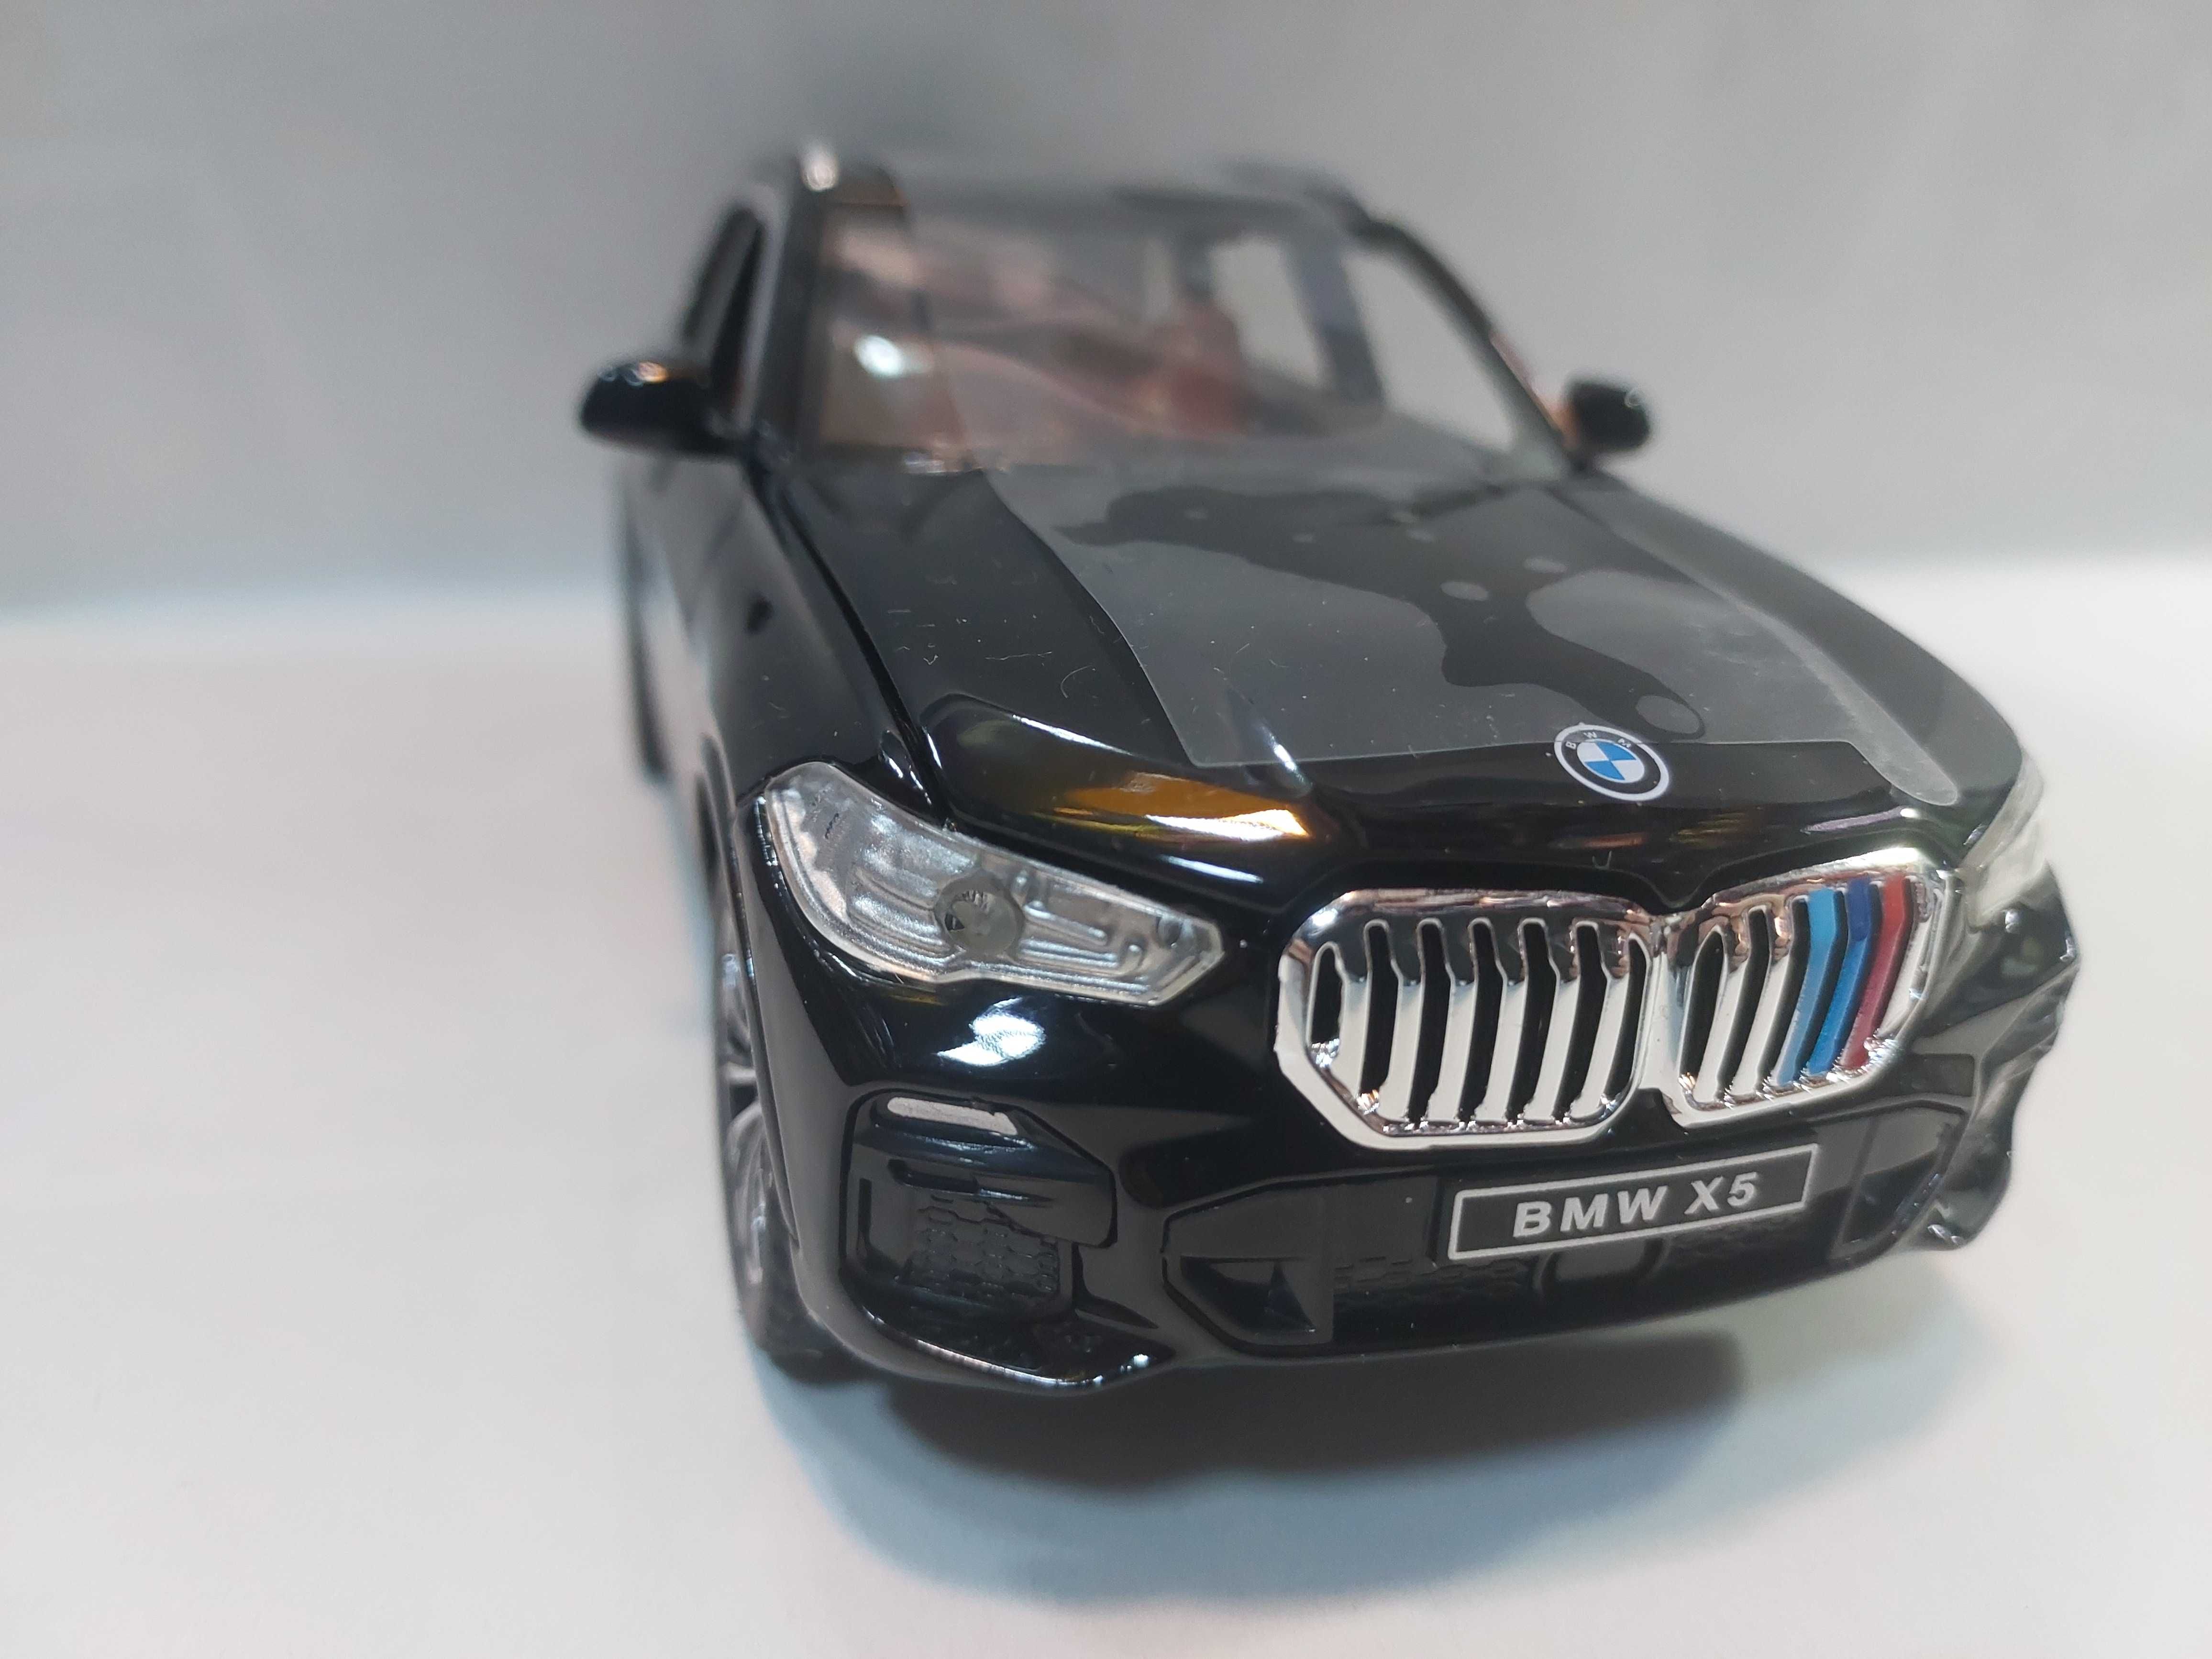 Macheta metal BMW x5